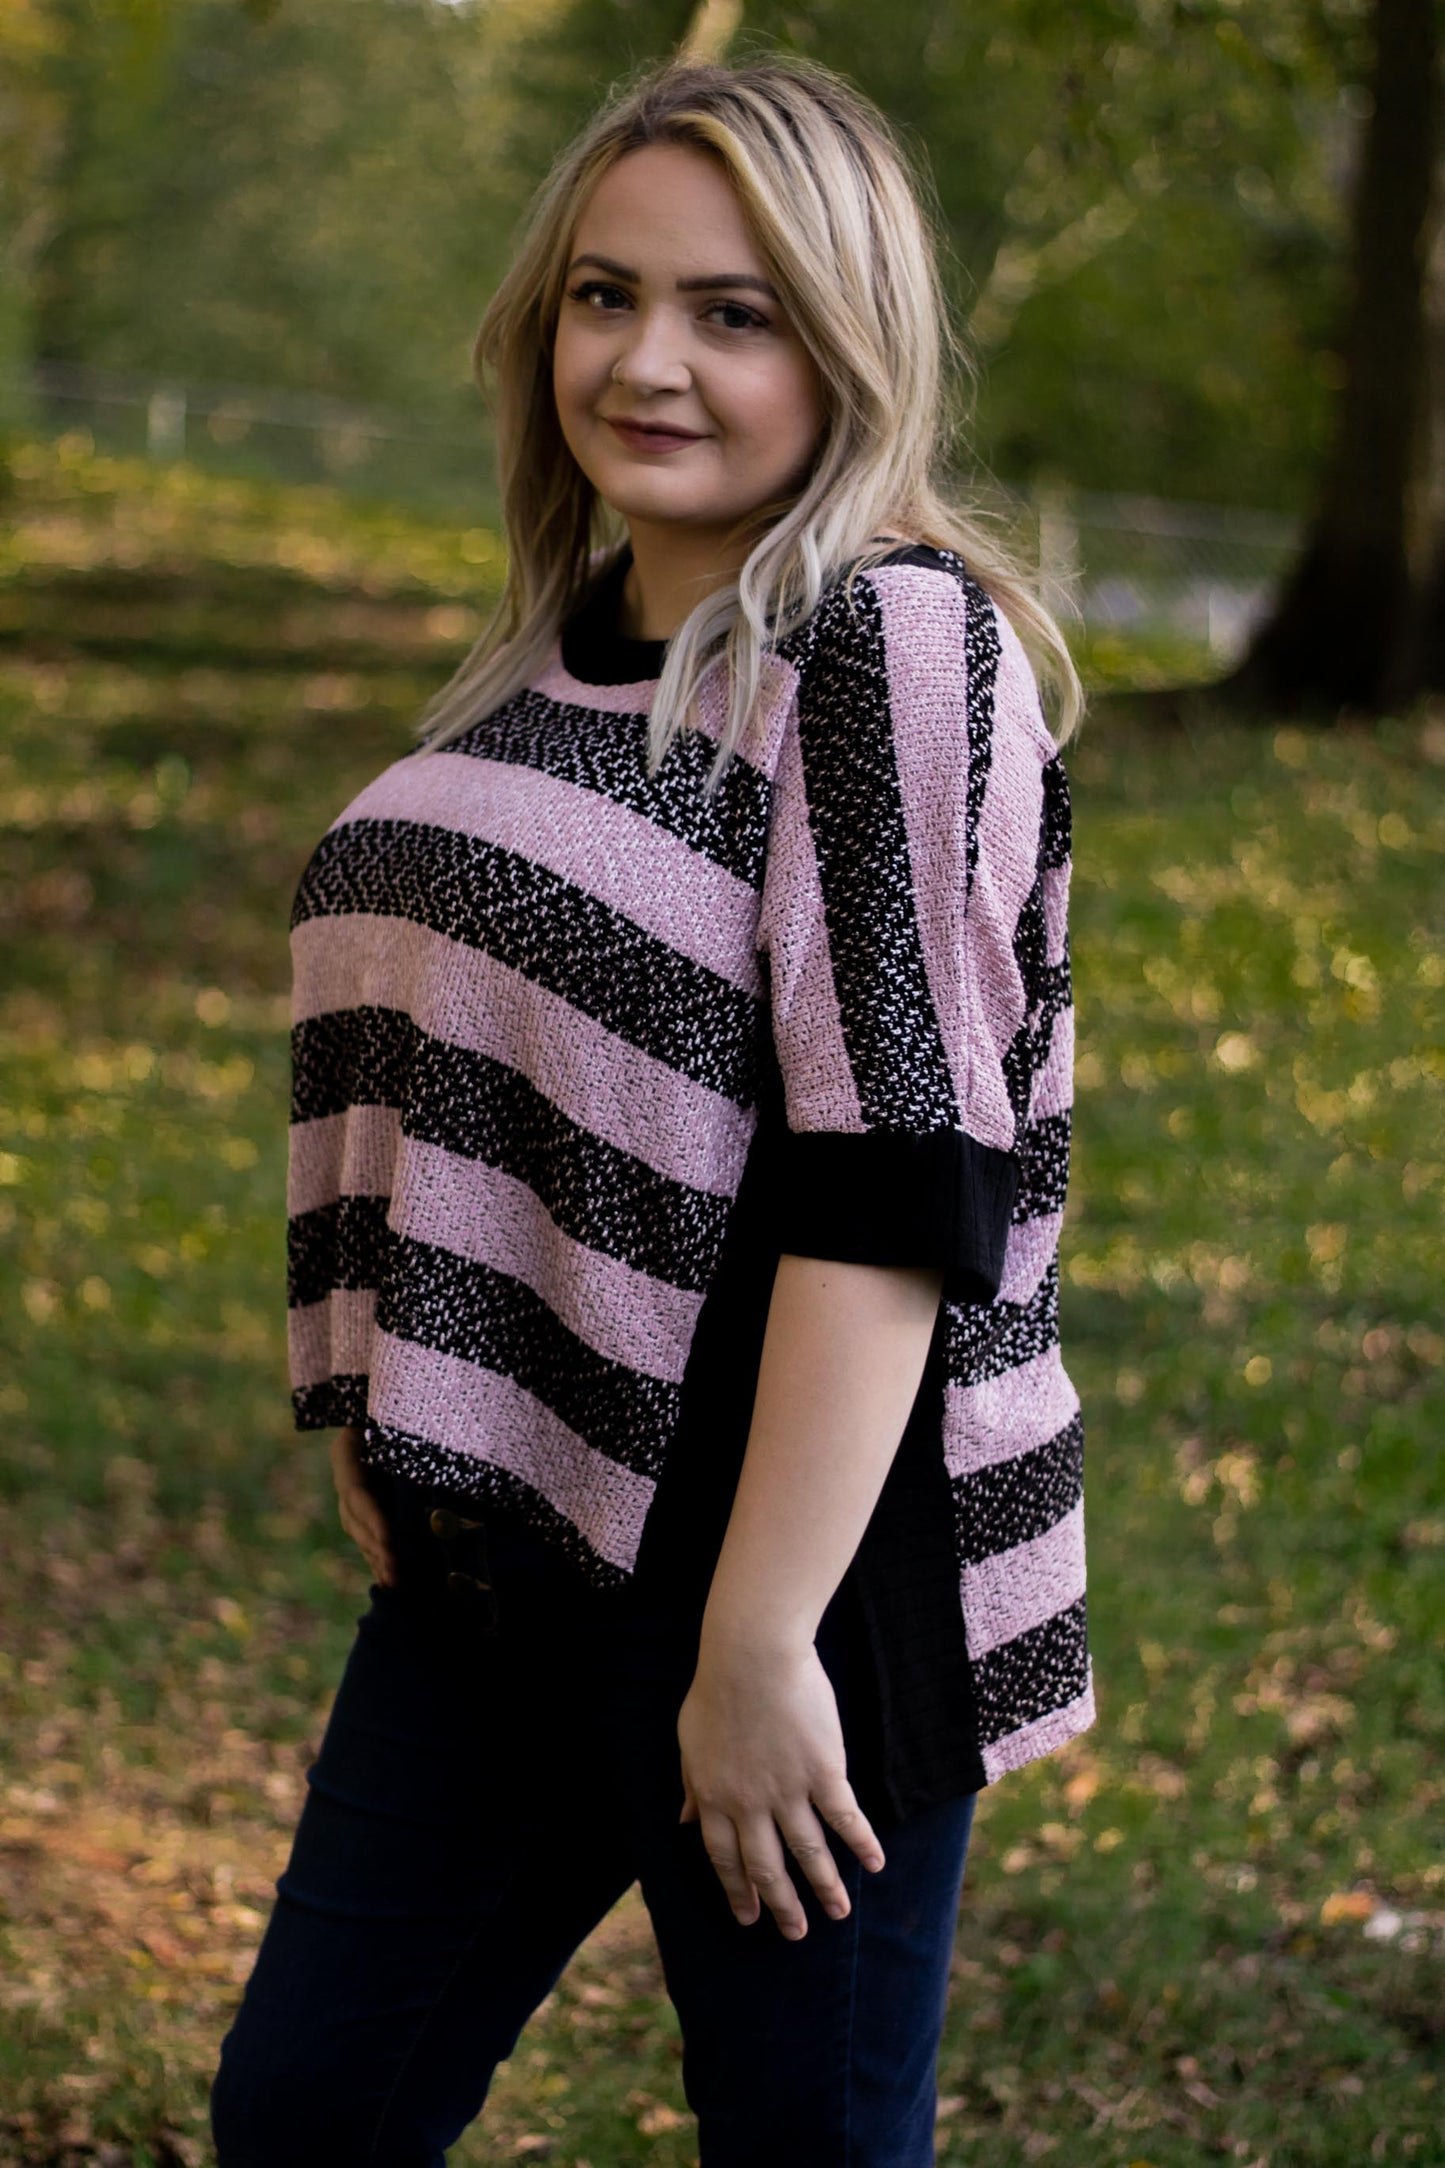 Gracie - Pink/Black Striped Knit Top